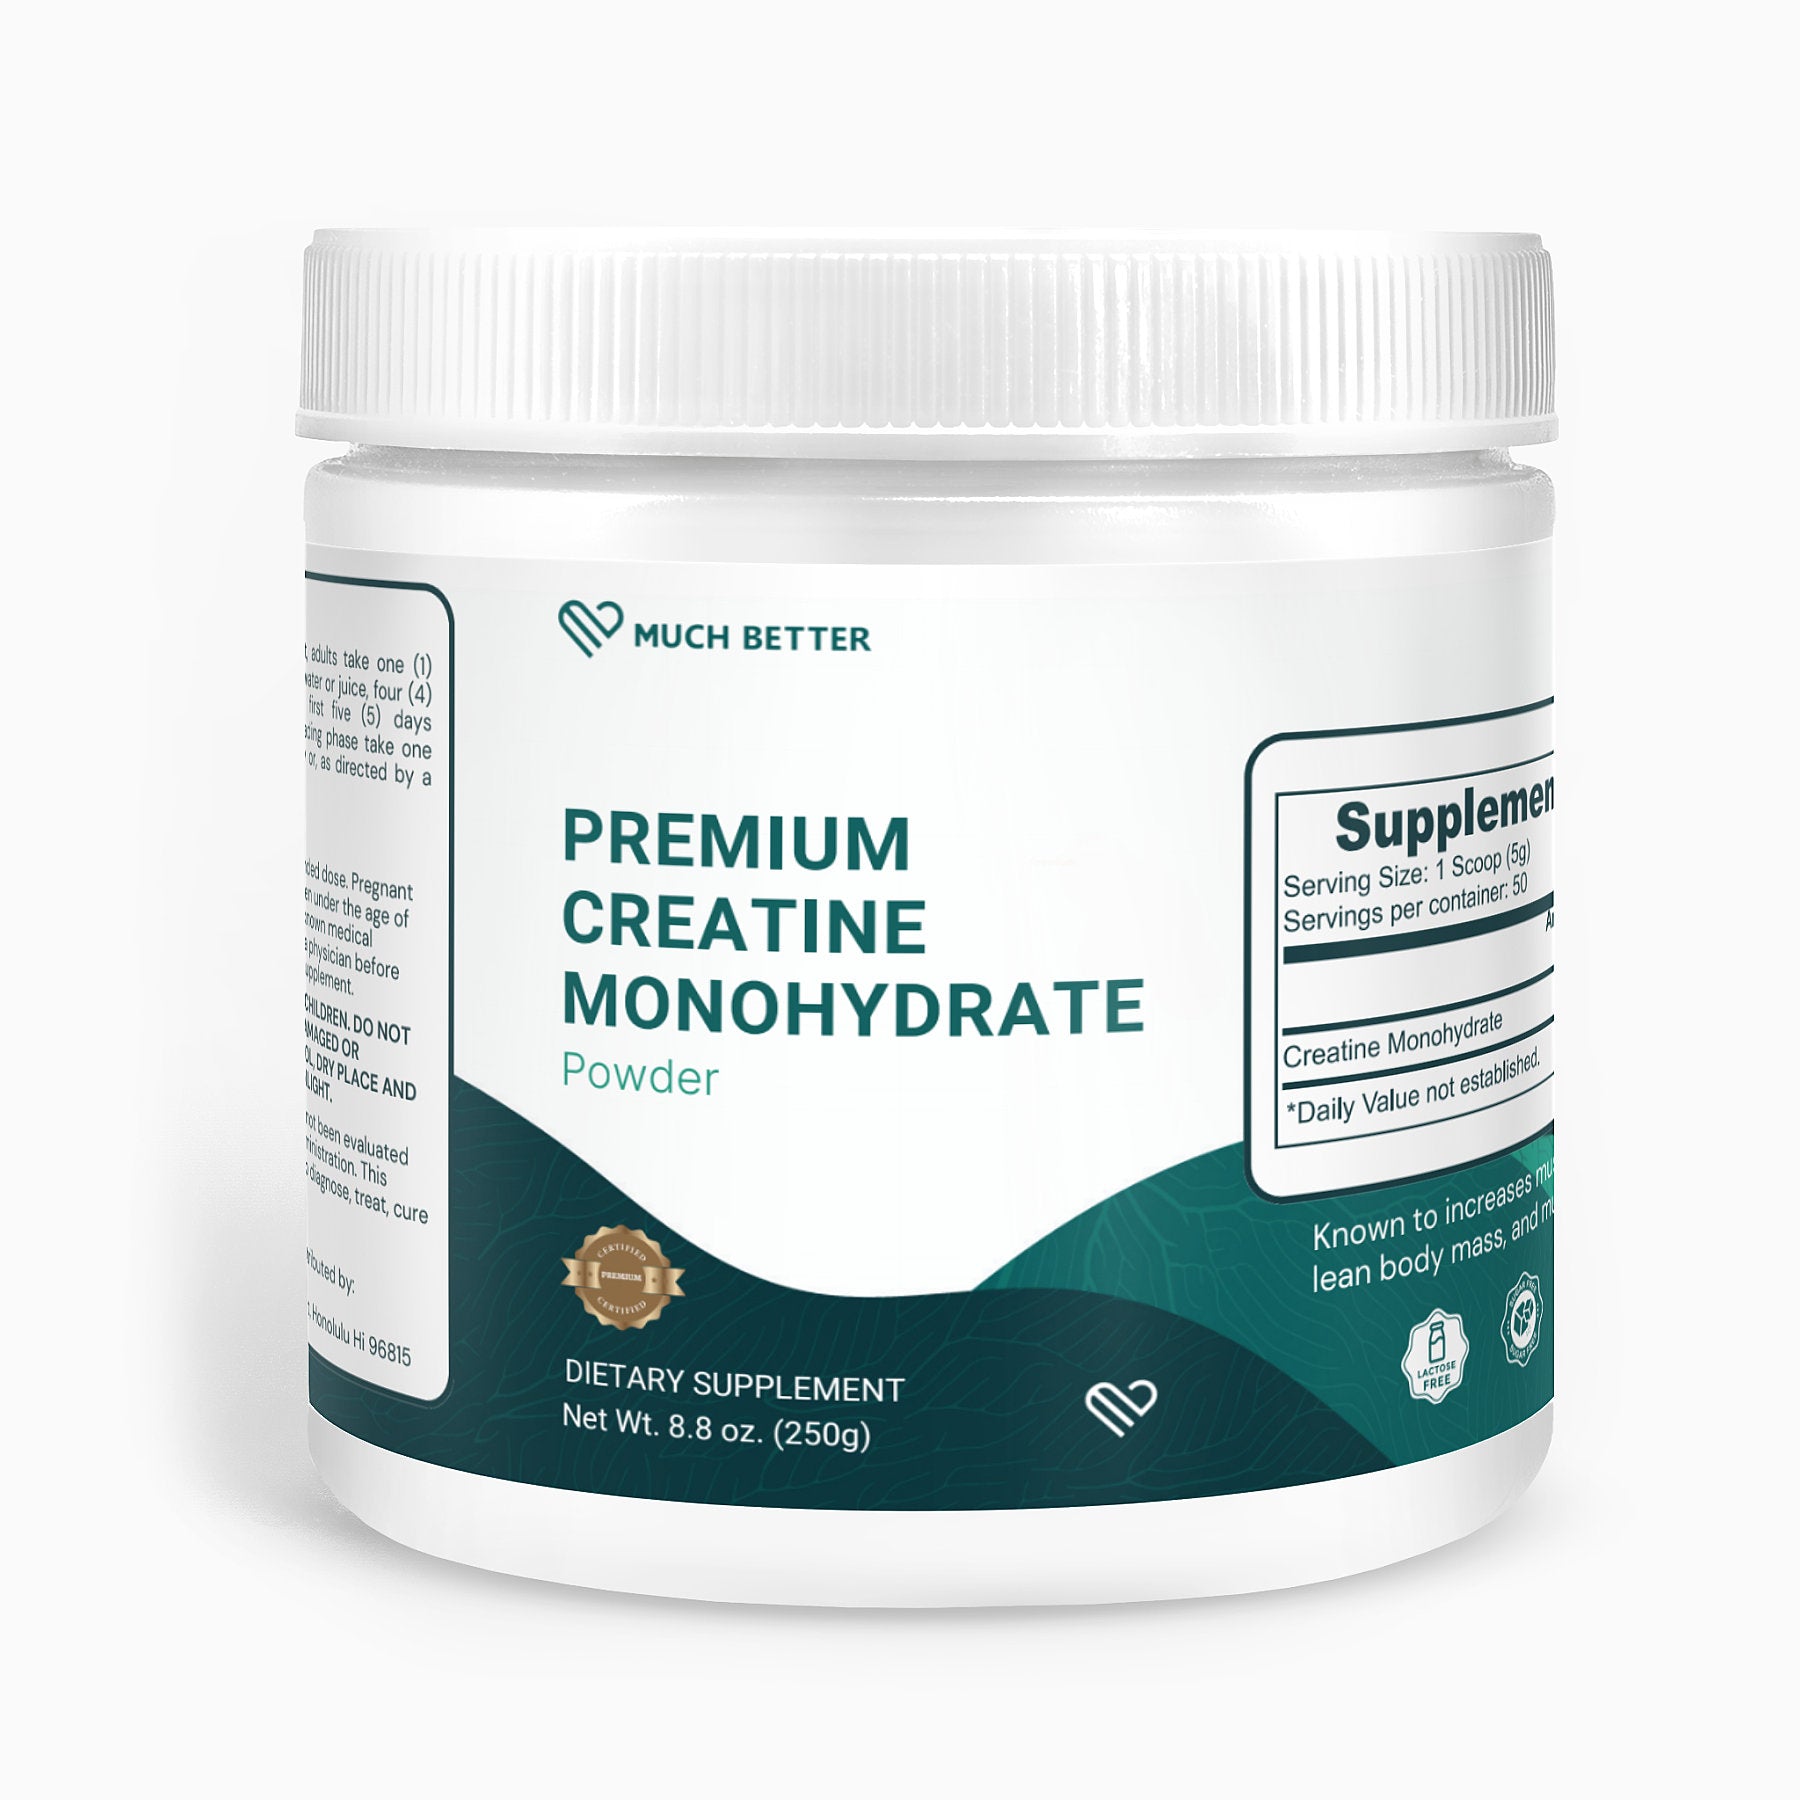 Premium Creatine Monohydrate